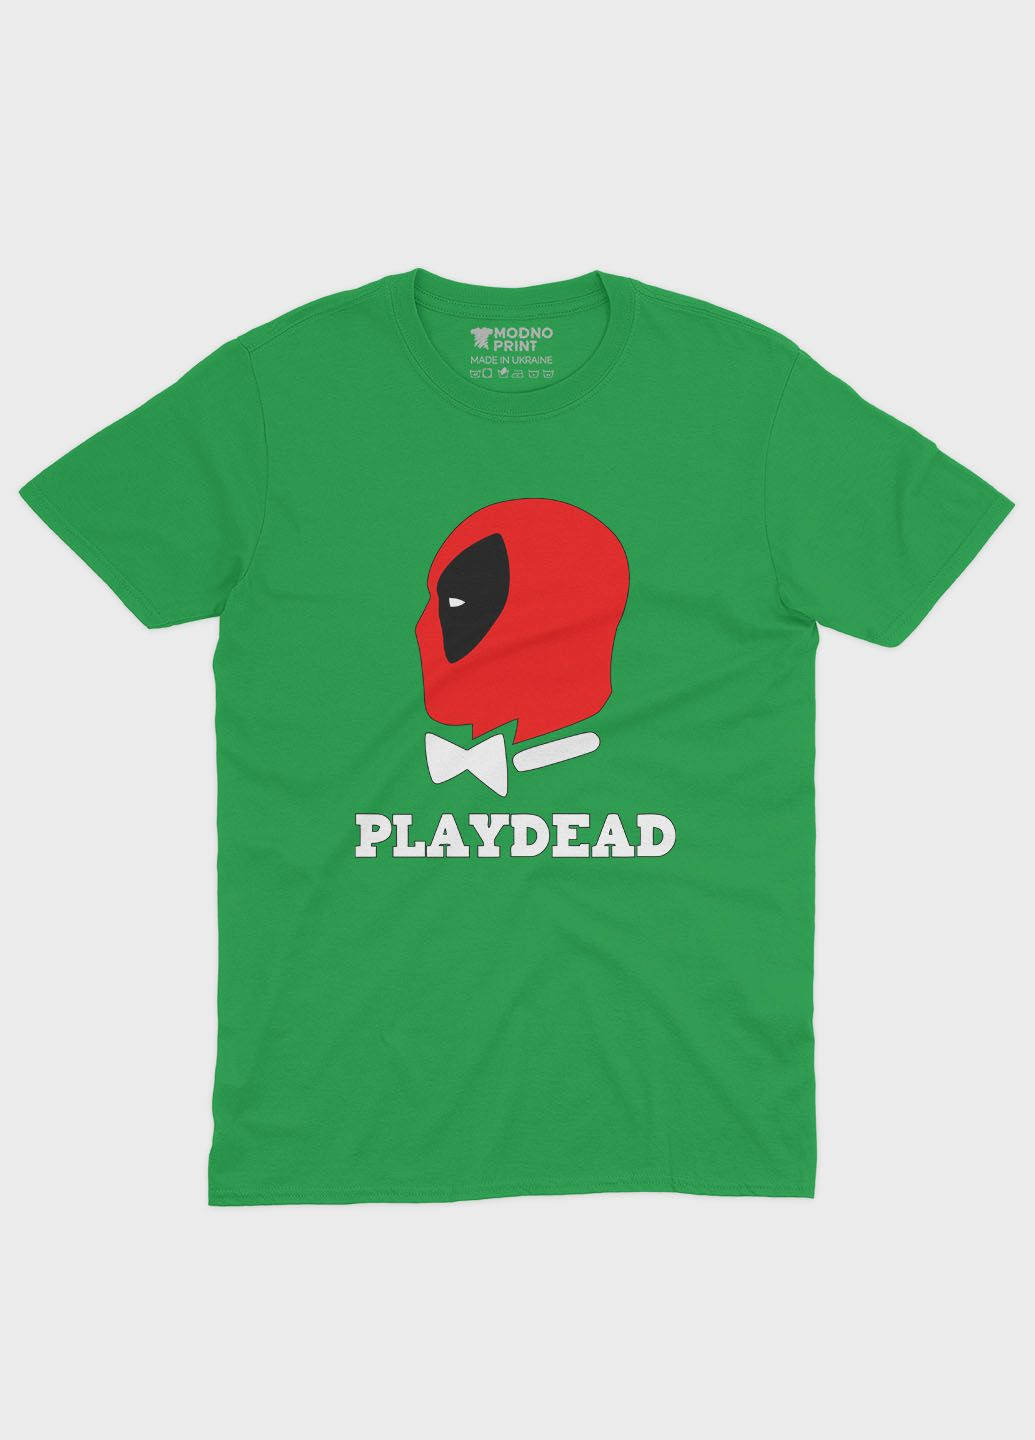 Зеленая демисезонная футболка для мальчика с принтом антигероя - дедпул (ts001-1-keg-006-015-023-b) Modno